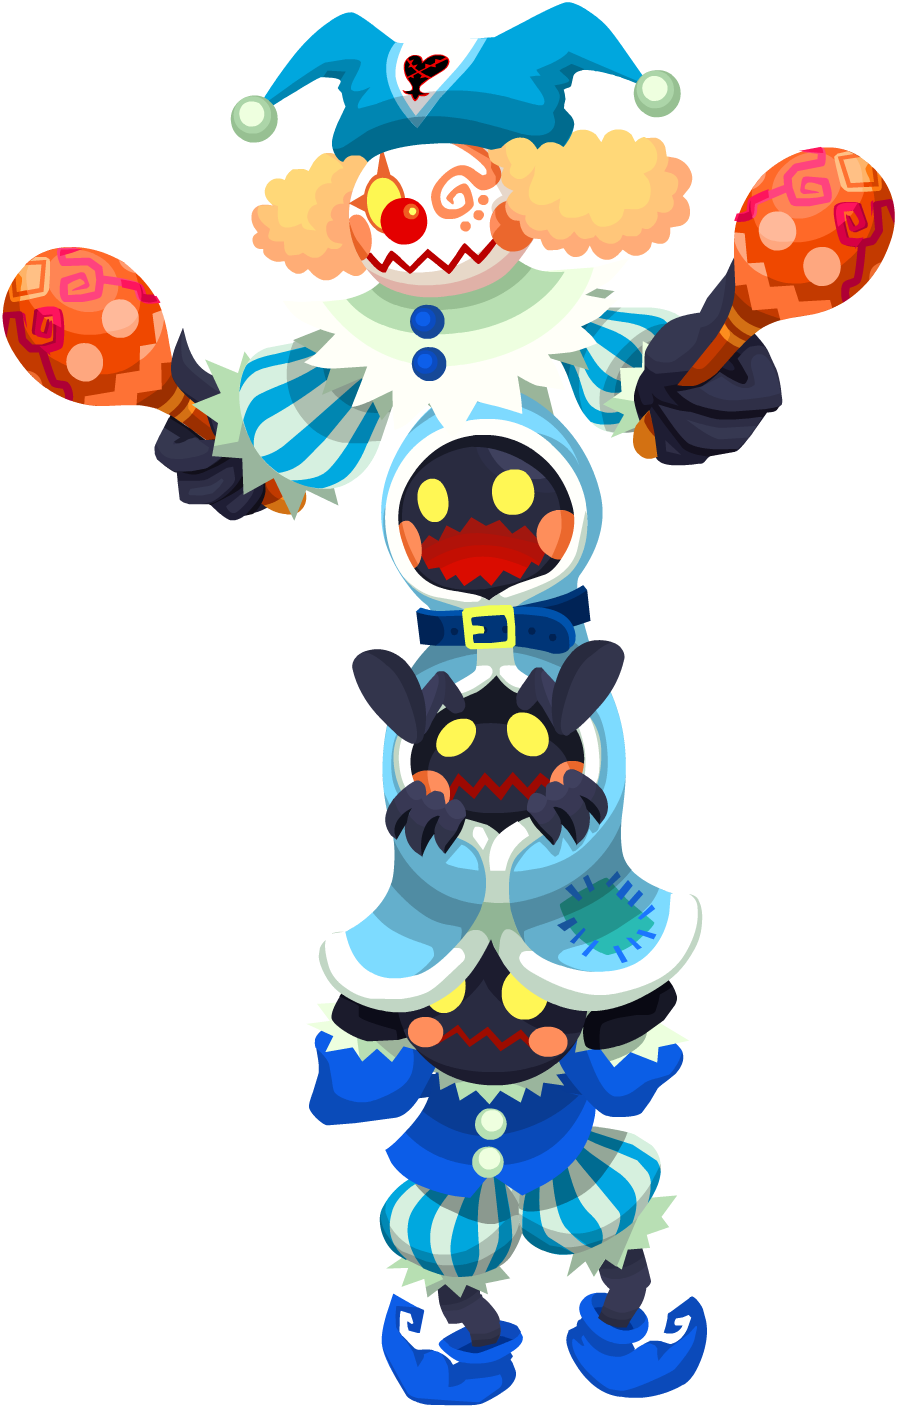 Circus Clown - Kingdom Hearts Wiki, the Kingdom Hearts encyclopedia